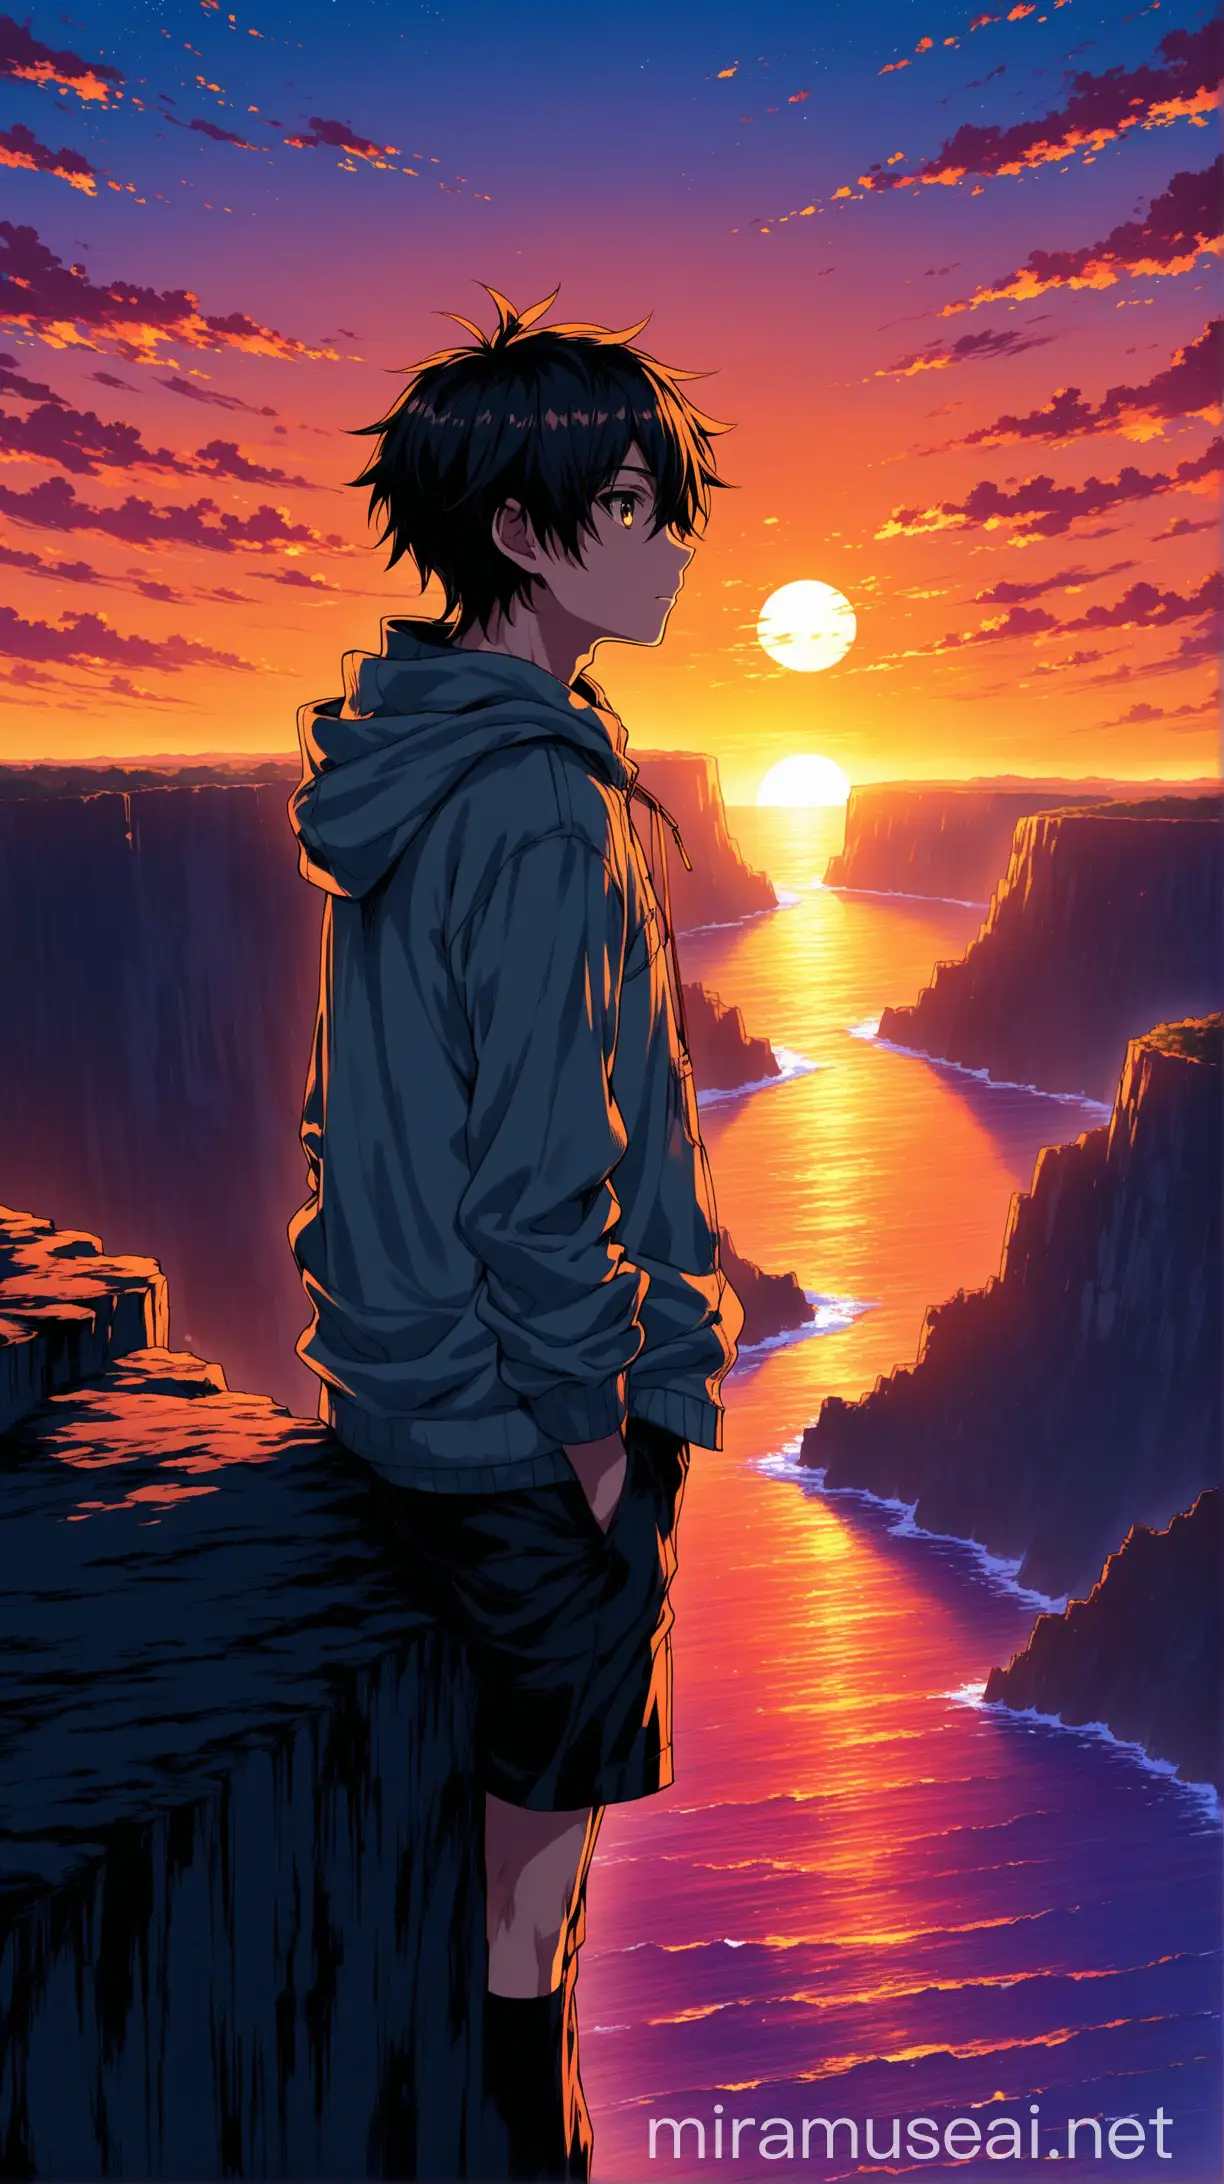 Anime Boy Admires Sunset on Cliff Edge Vibrant Sky View